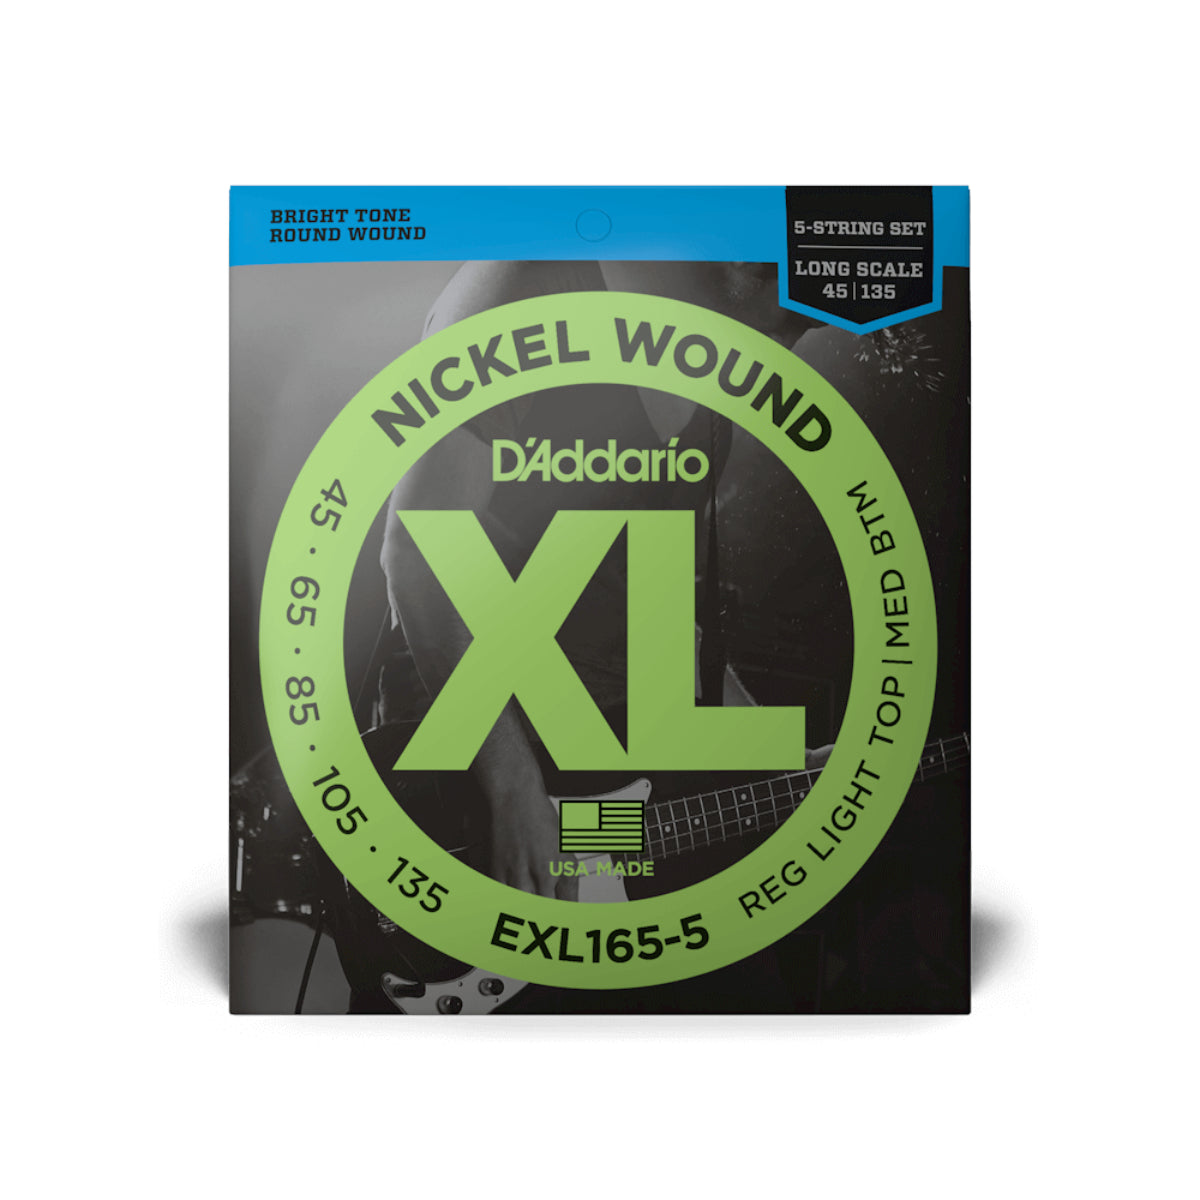 D'Addario EXL1655 XL Nickel Round Wound 5-String Bass Strings 45-135 Custom Light/ Long Scale Set